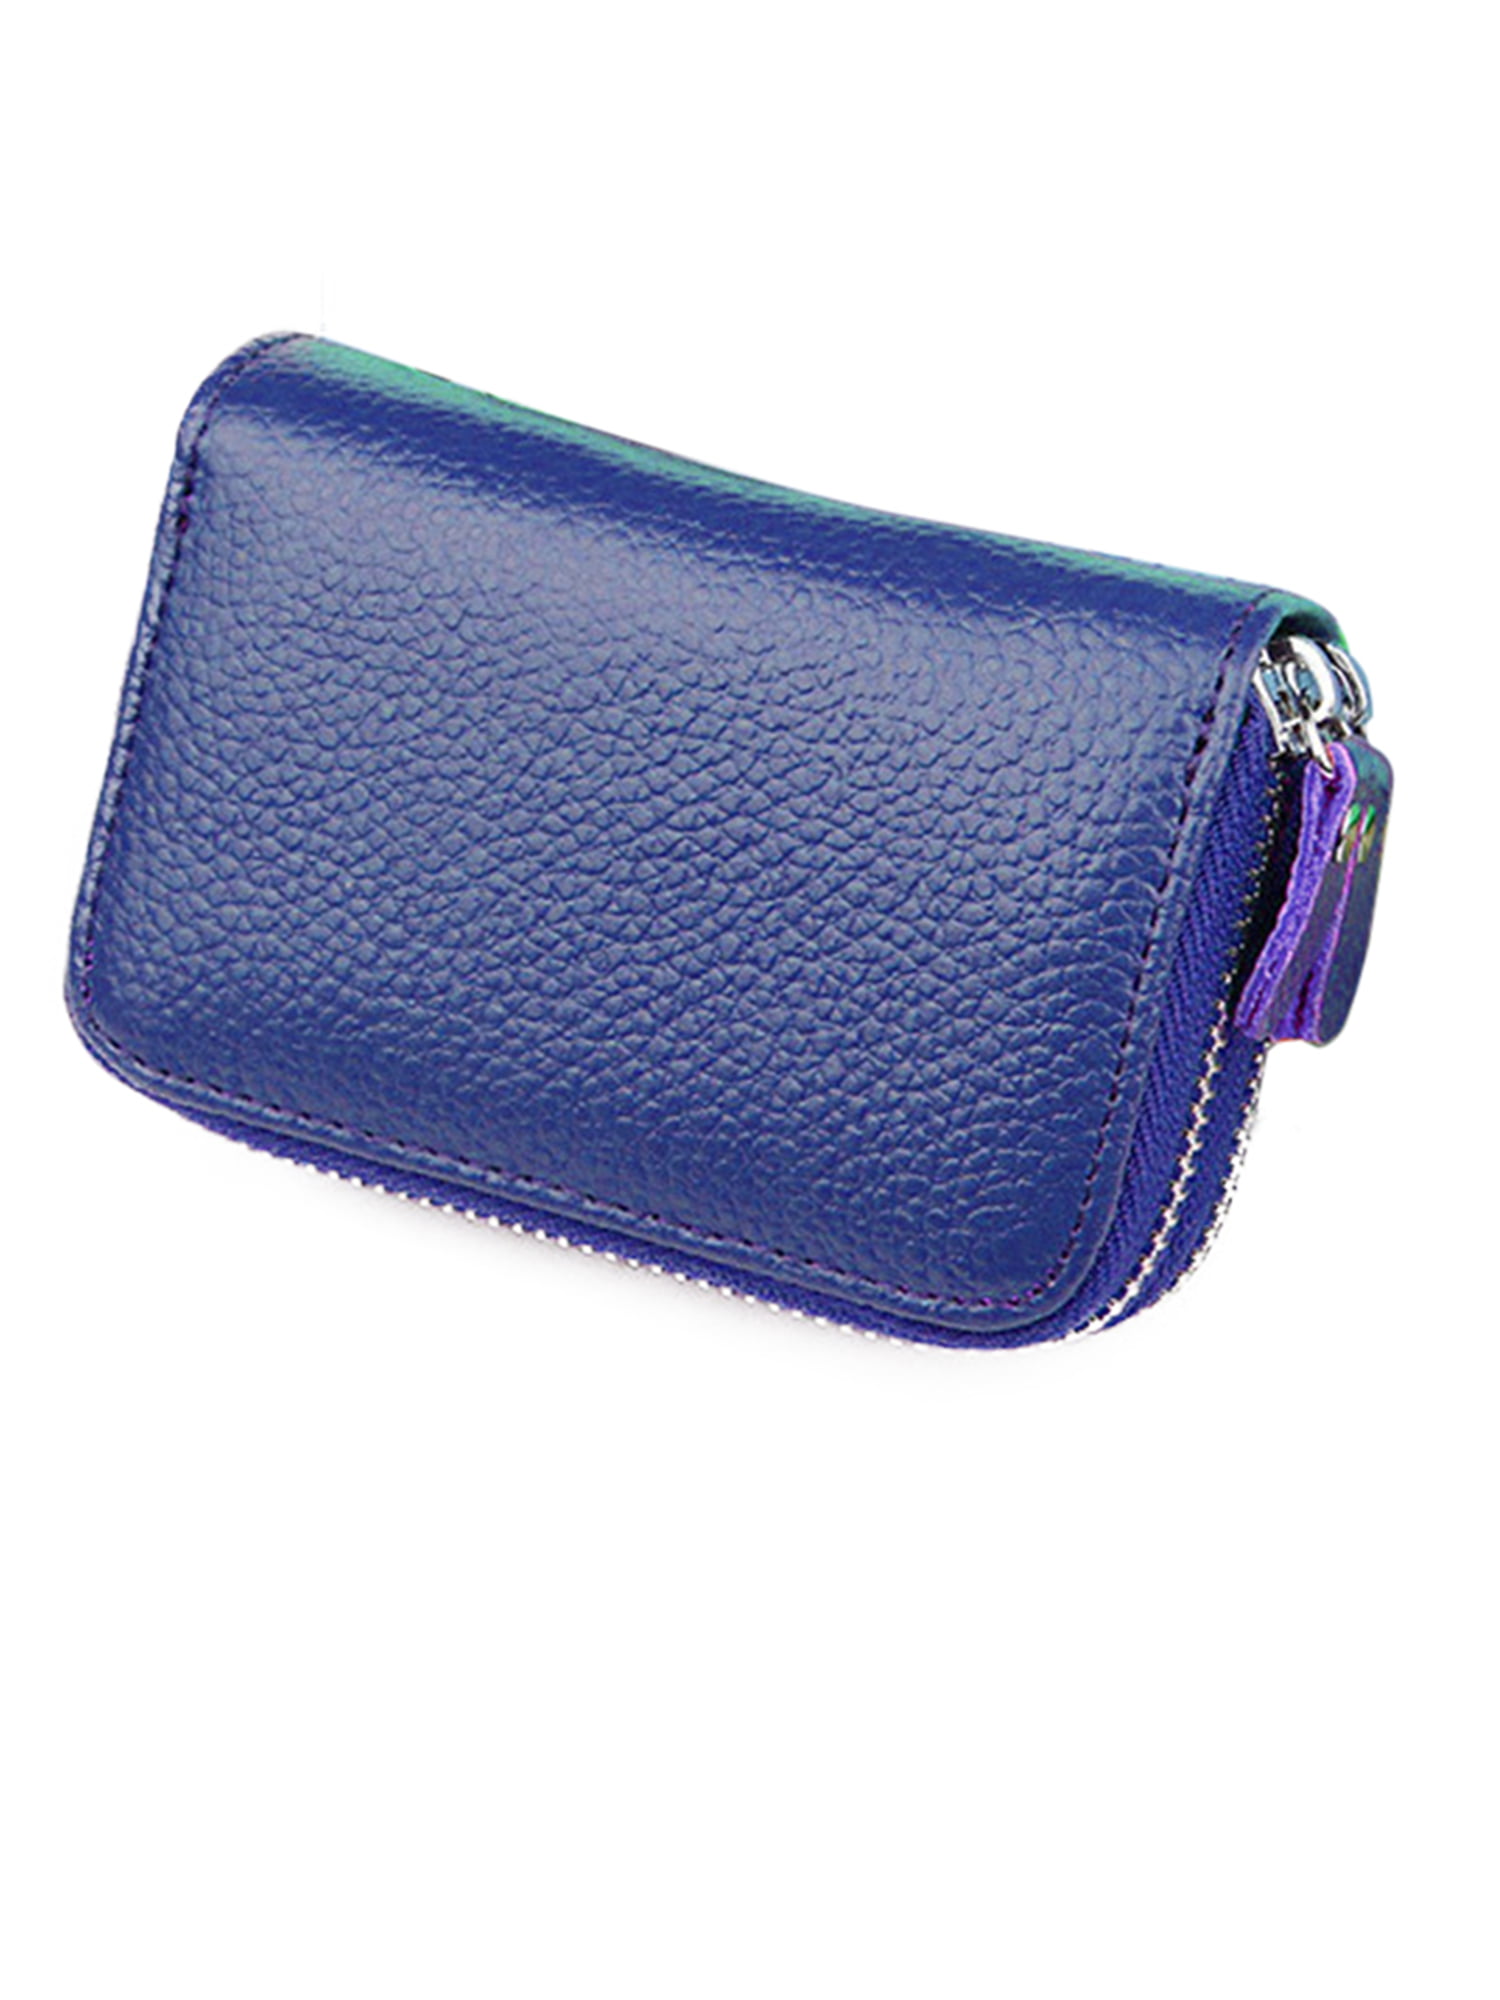 Wodstyle - Women Coin Purse Card Wallet Clutch Double Zip Mini Small Handbag - www.semashow.com ...